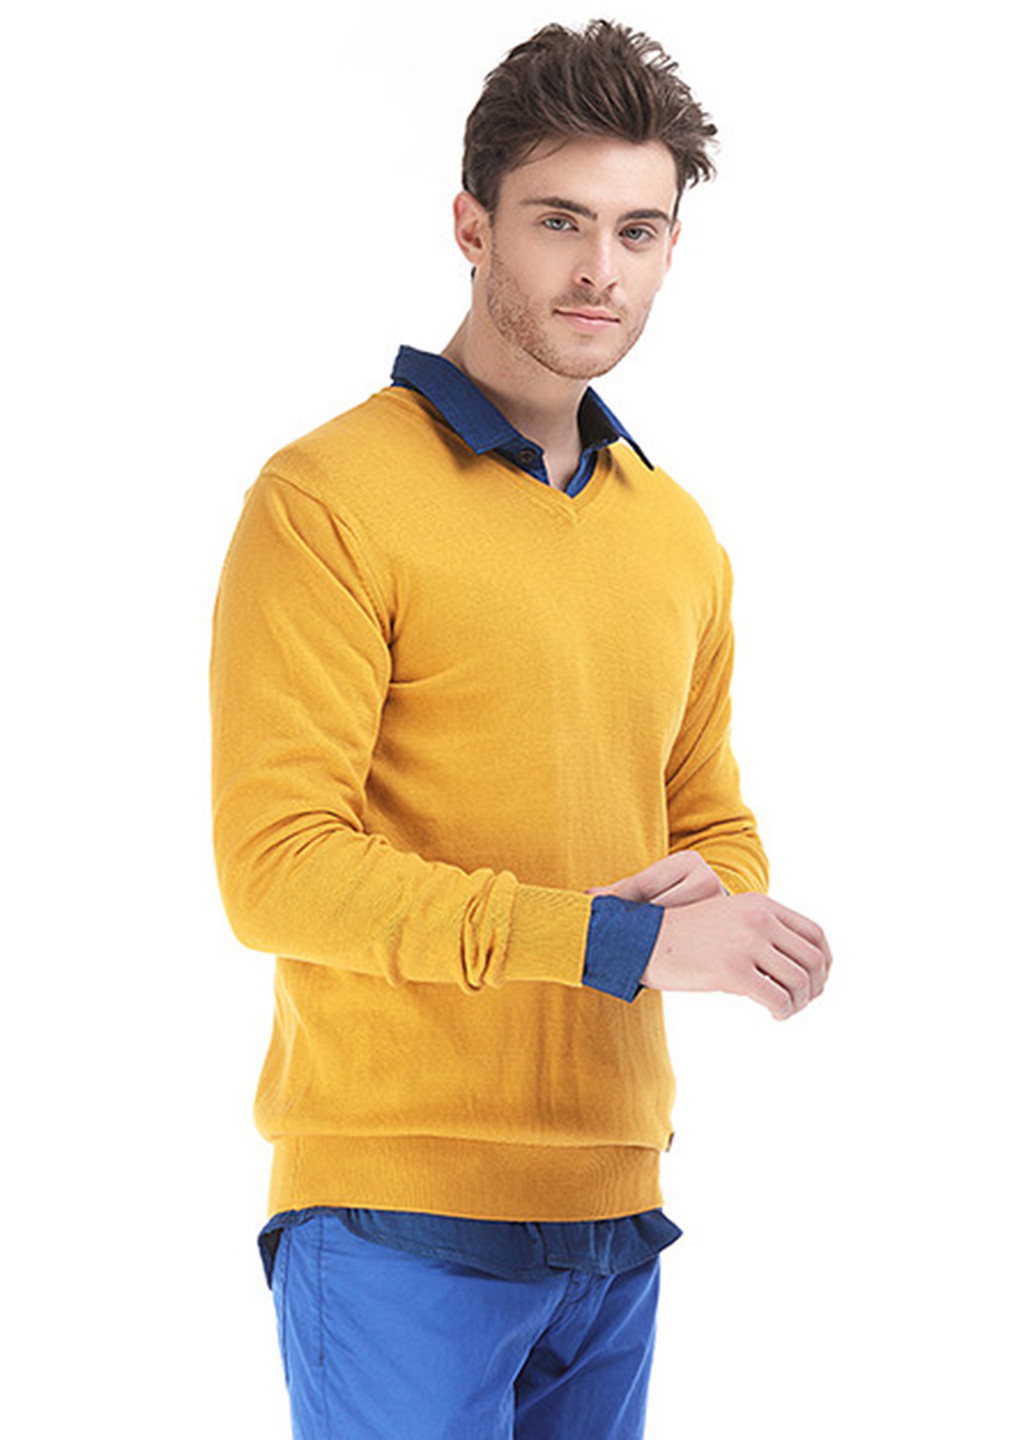 Желтый демисезонный пуловер пуловер Яavin